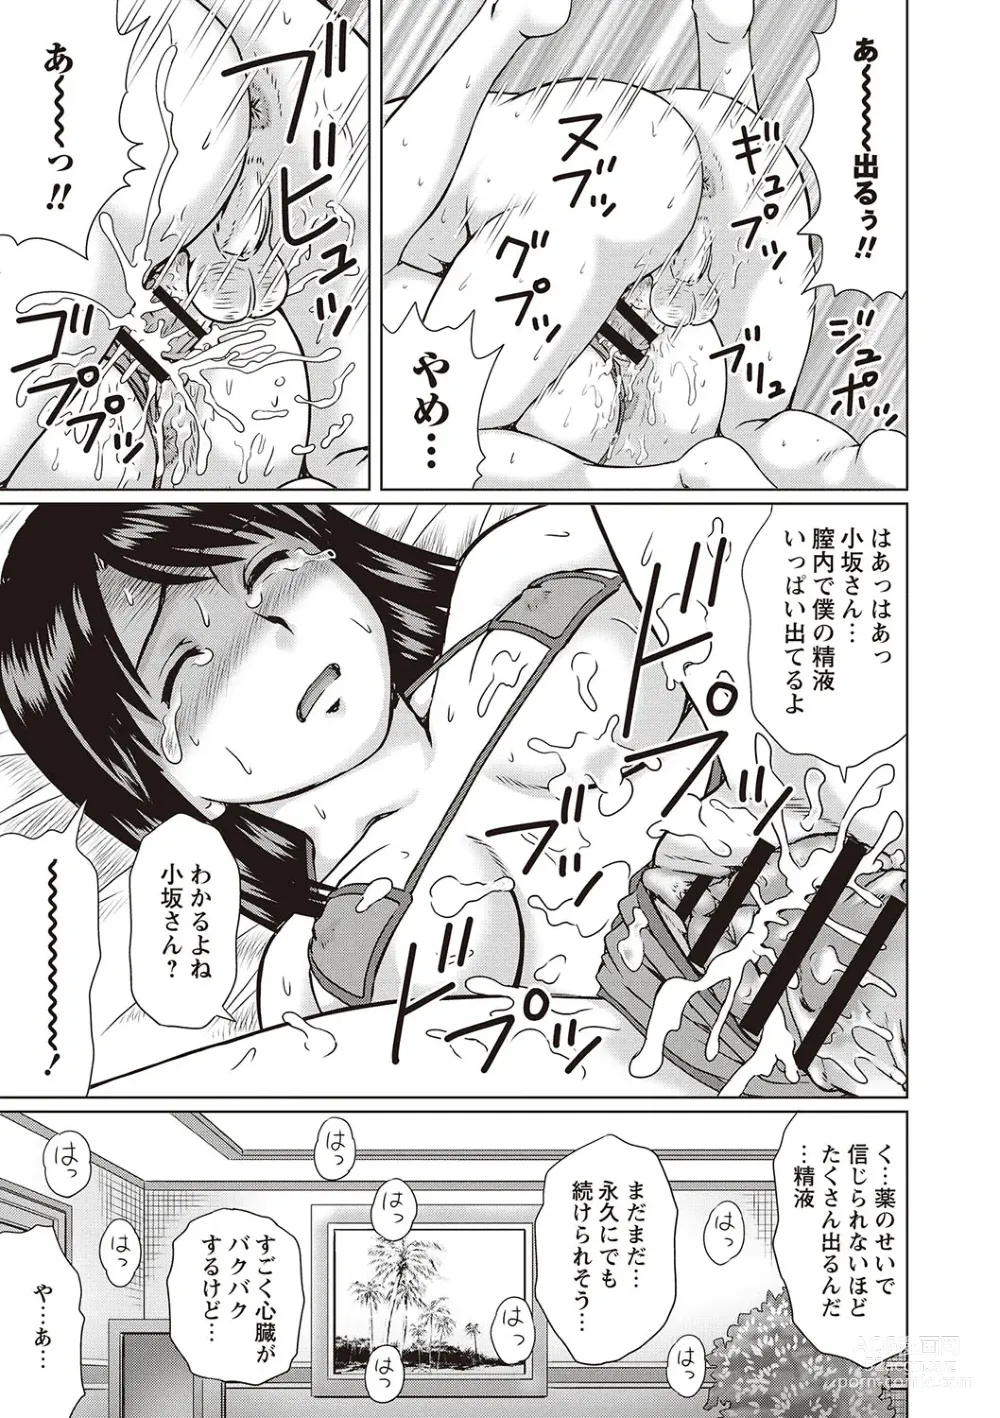 Page 102 of manga Doutei Revenge SEX